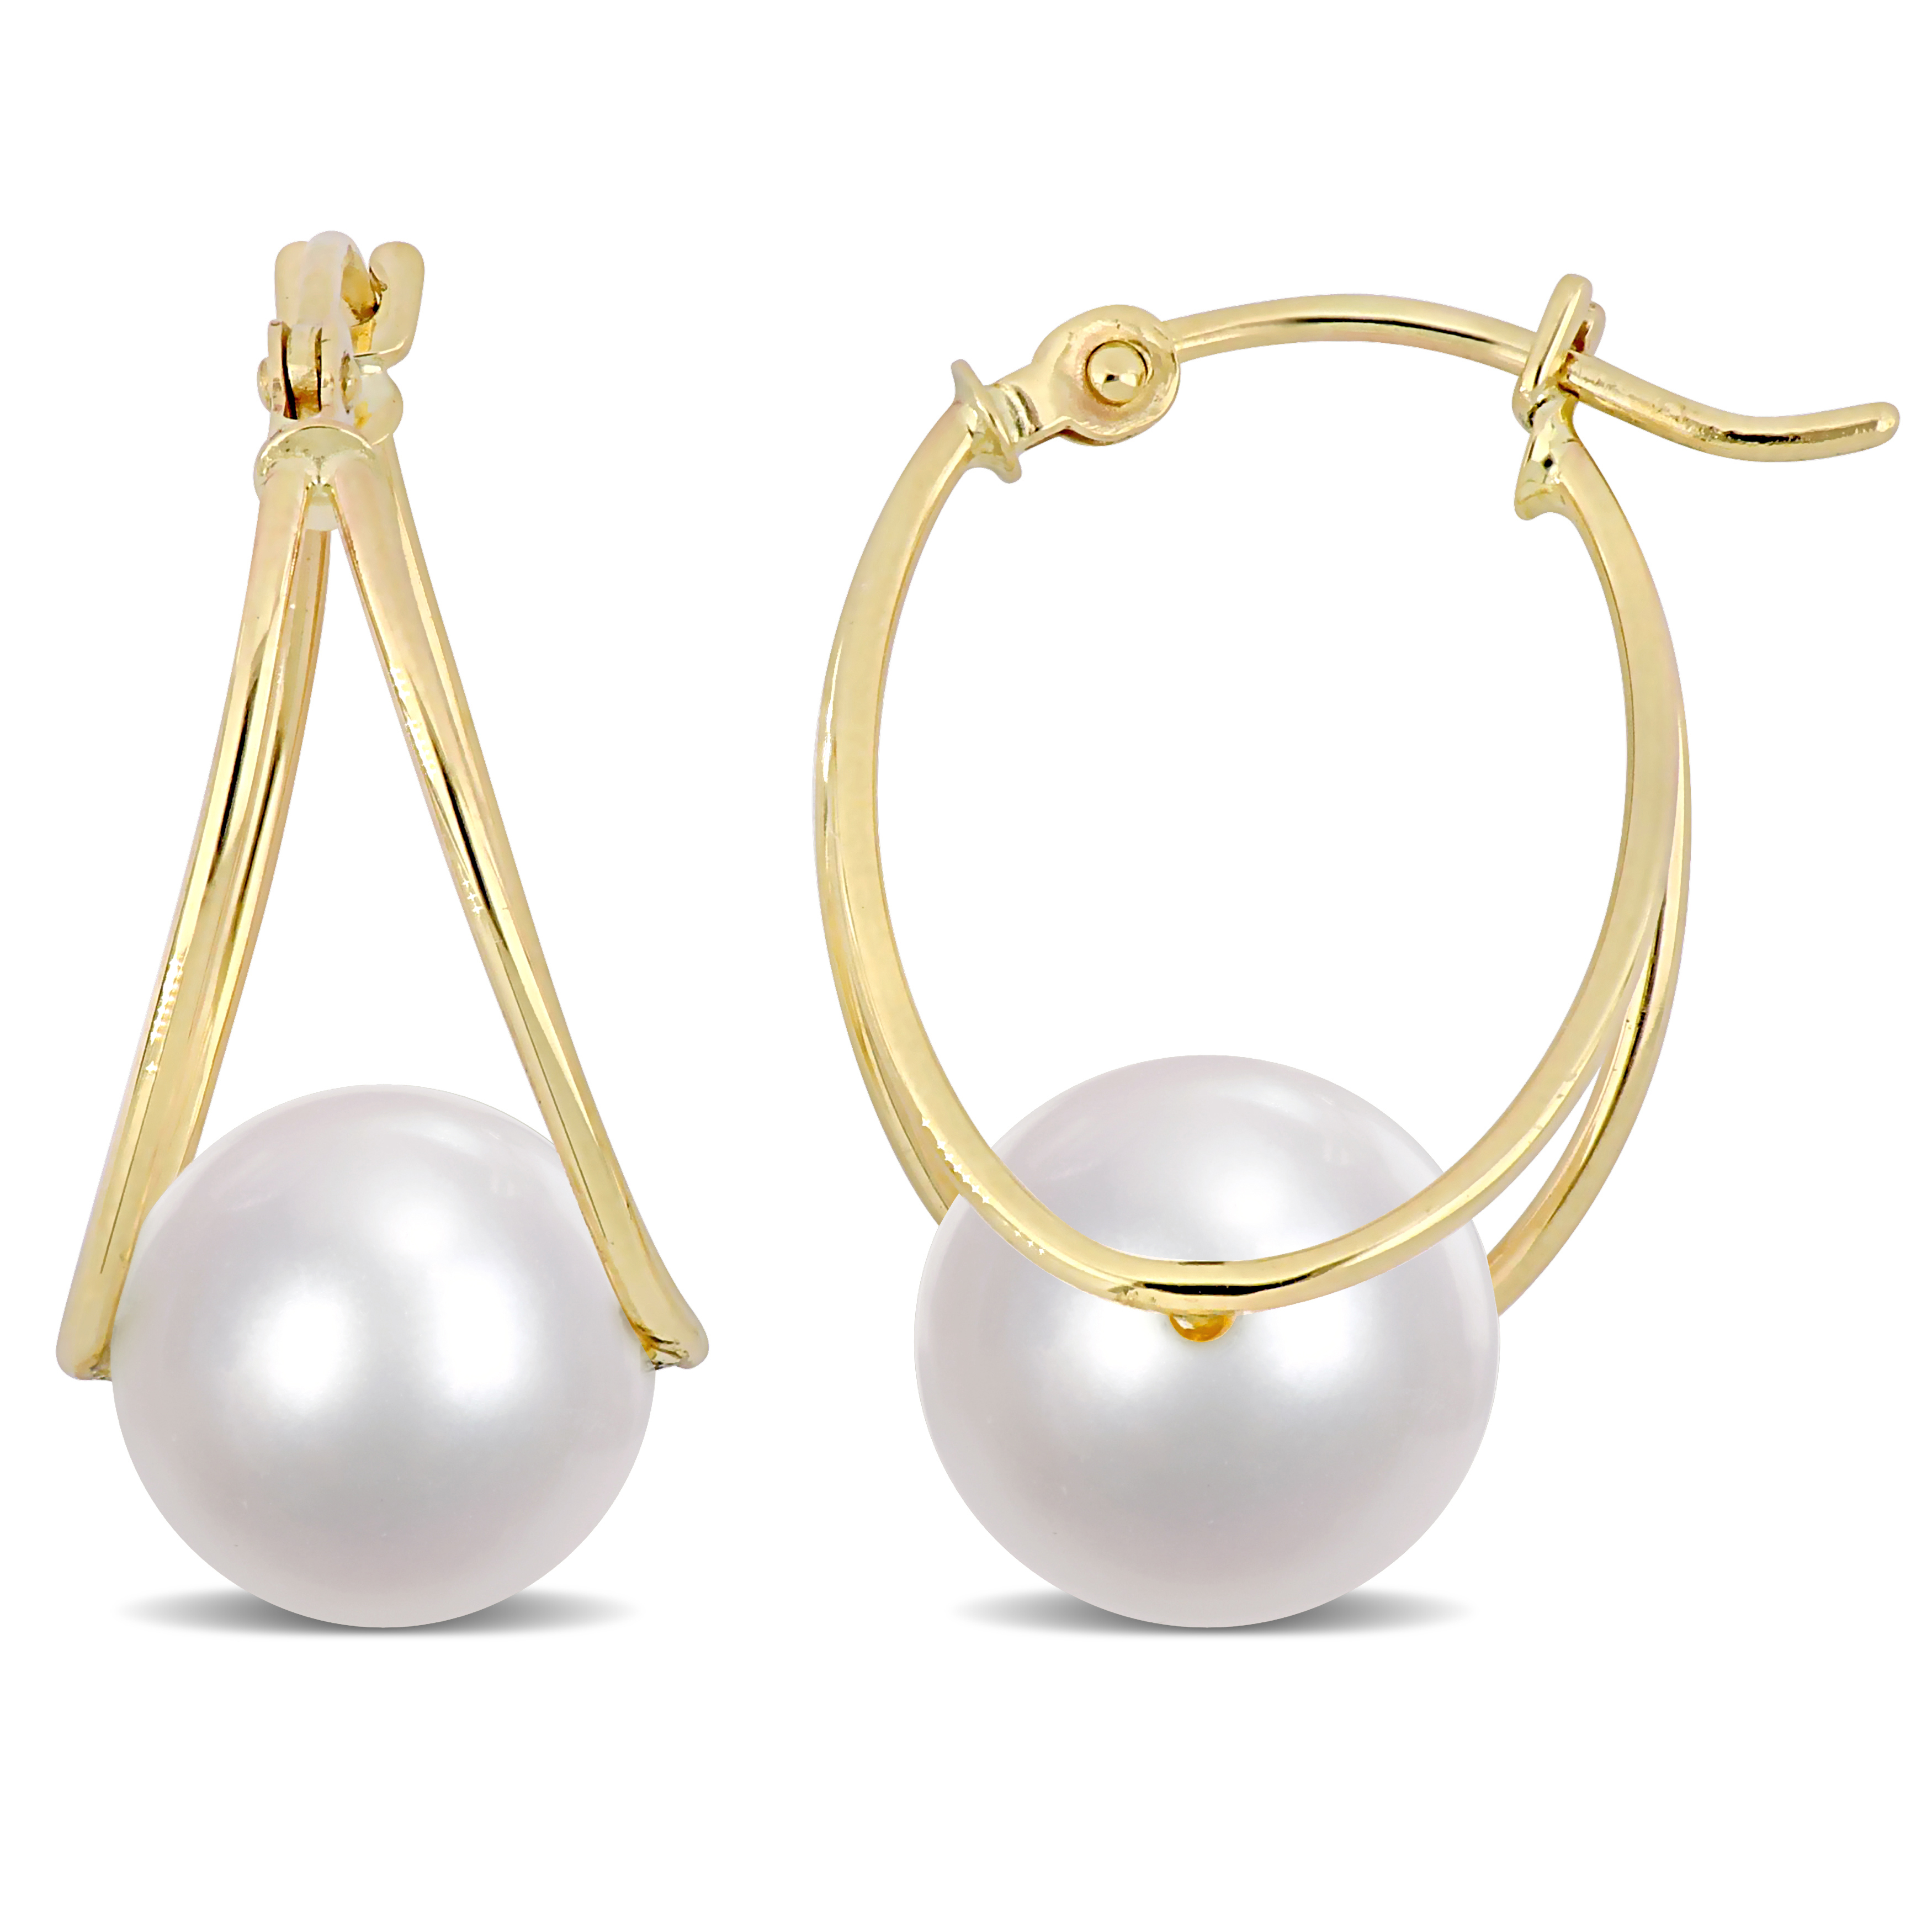 8 - 8.5 MM Freshwater Cultured Pearl Earrings in 14k Yellow Gold